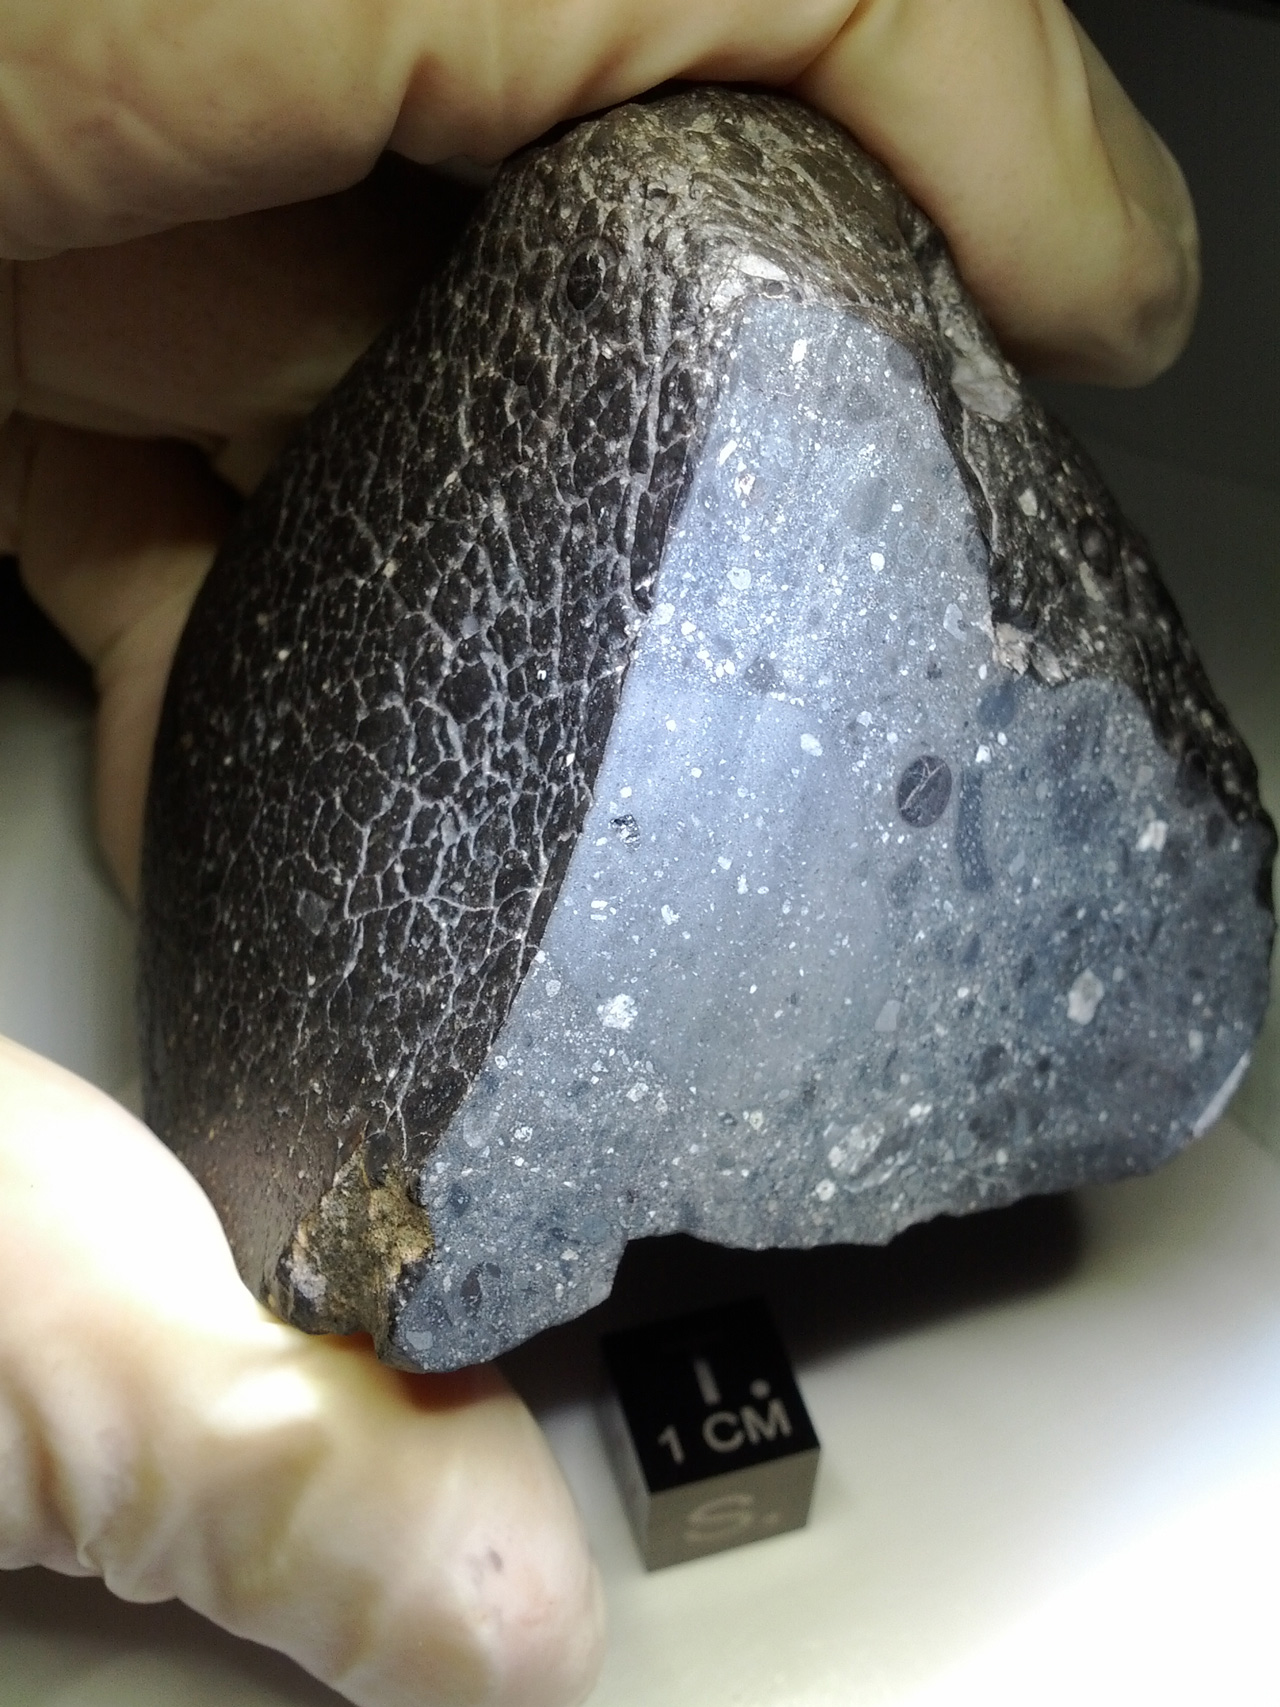 Small, black meteorite held between thumb and finger.